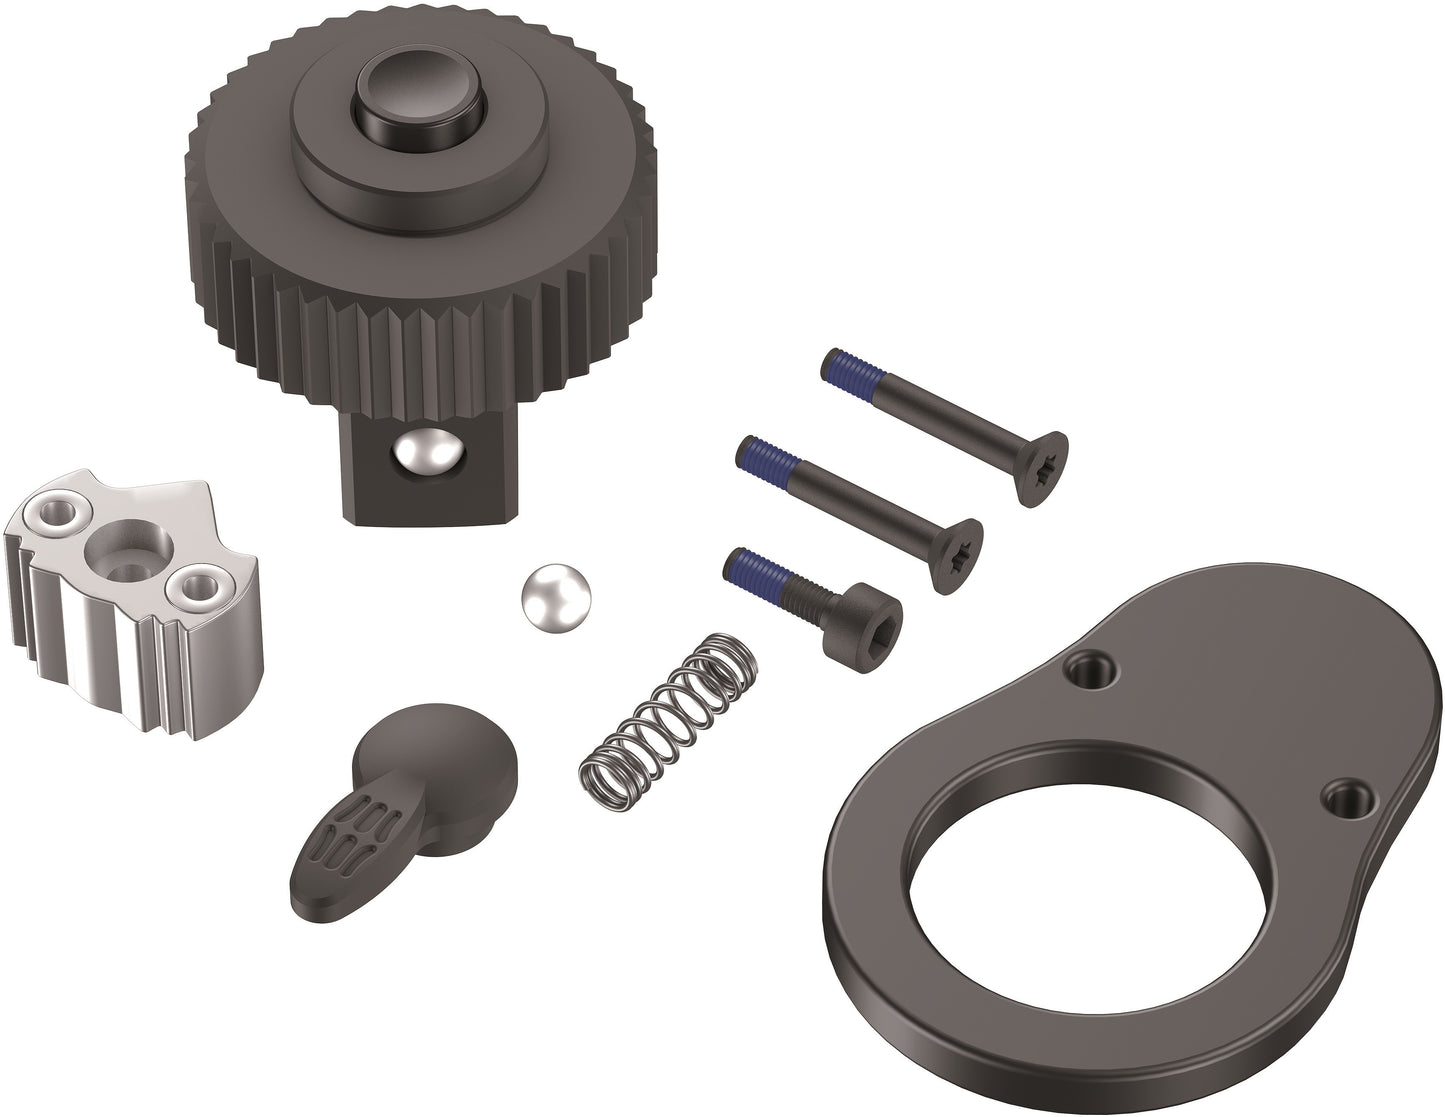 wera 9908 c 5 click torque ratchet wrench repair kit 1/2" 05547636001